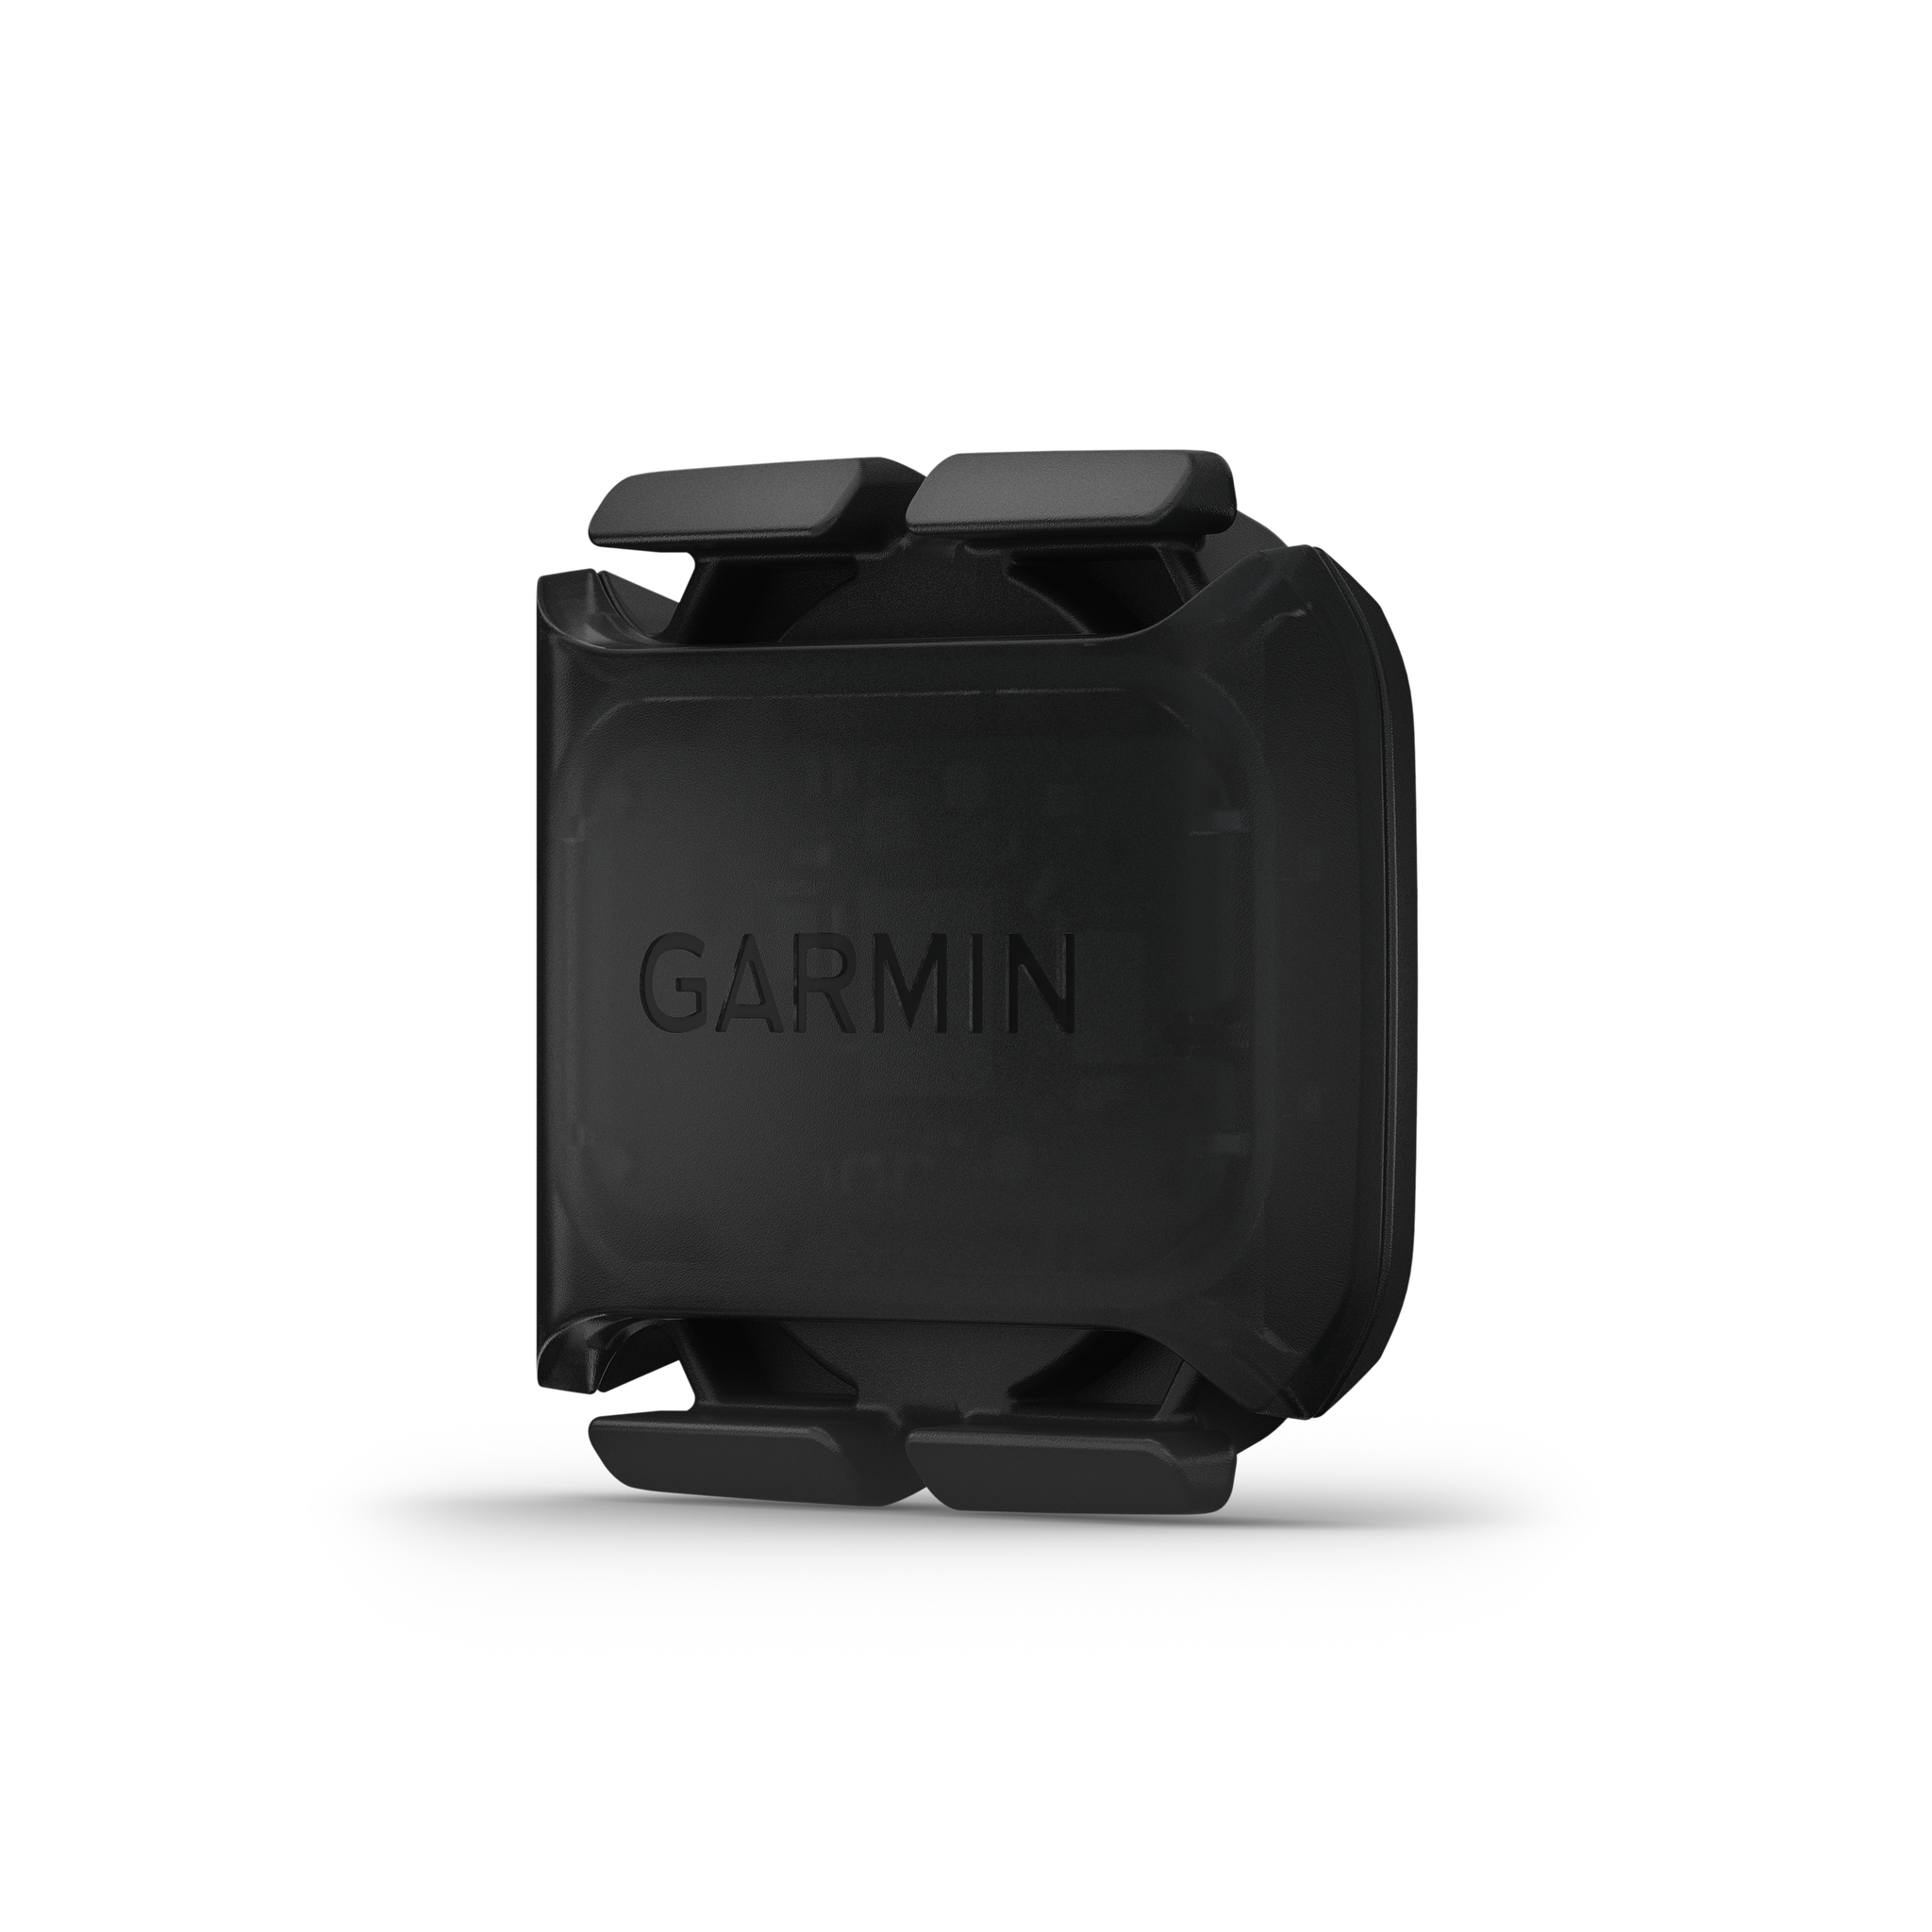 Garmin Bike Speed 2 and Cadence Sensor 2